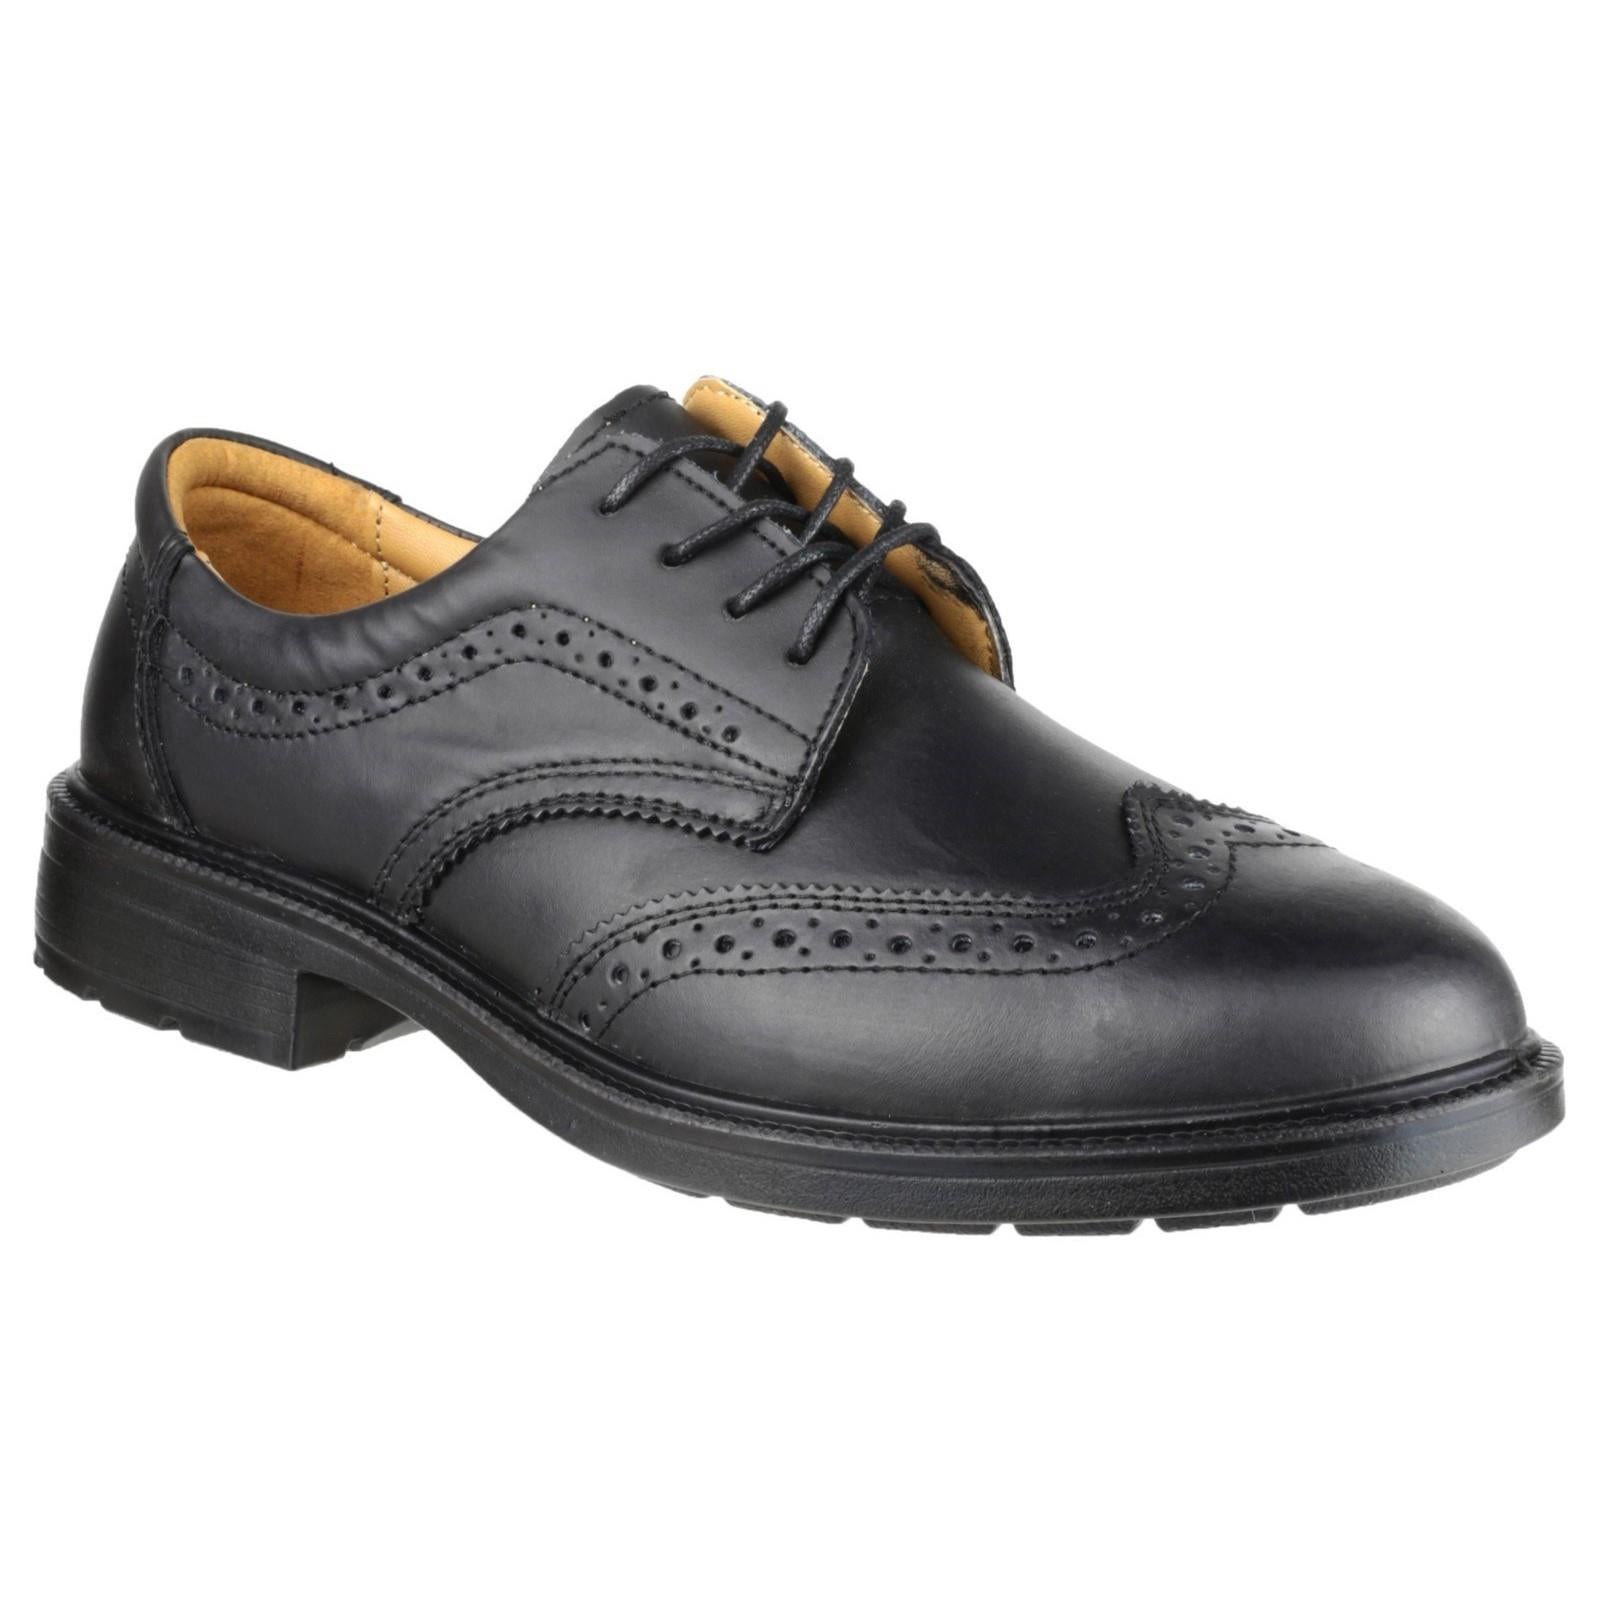 Amblers S1P black leather steel toe-cap/midsole safety brogue shoe #FS44